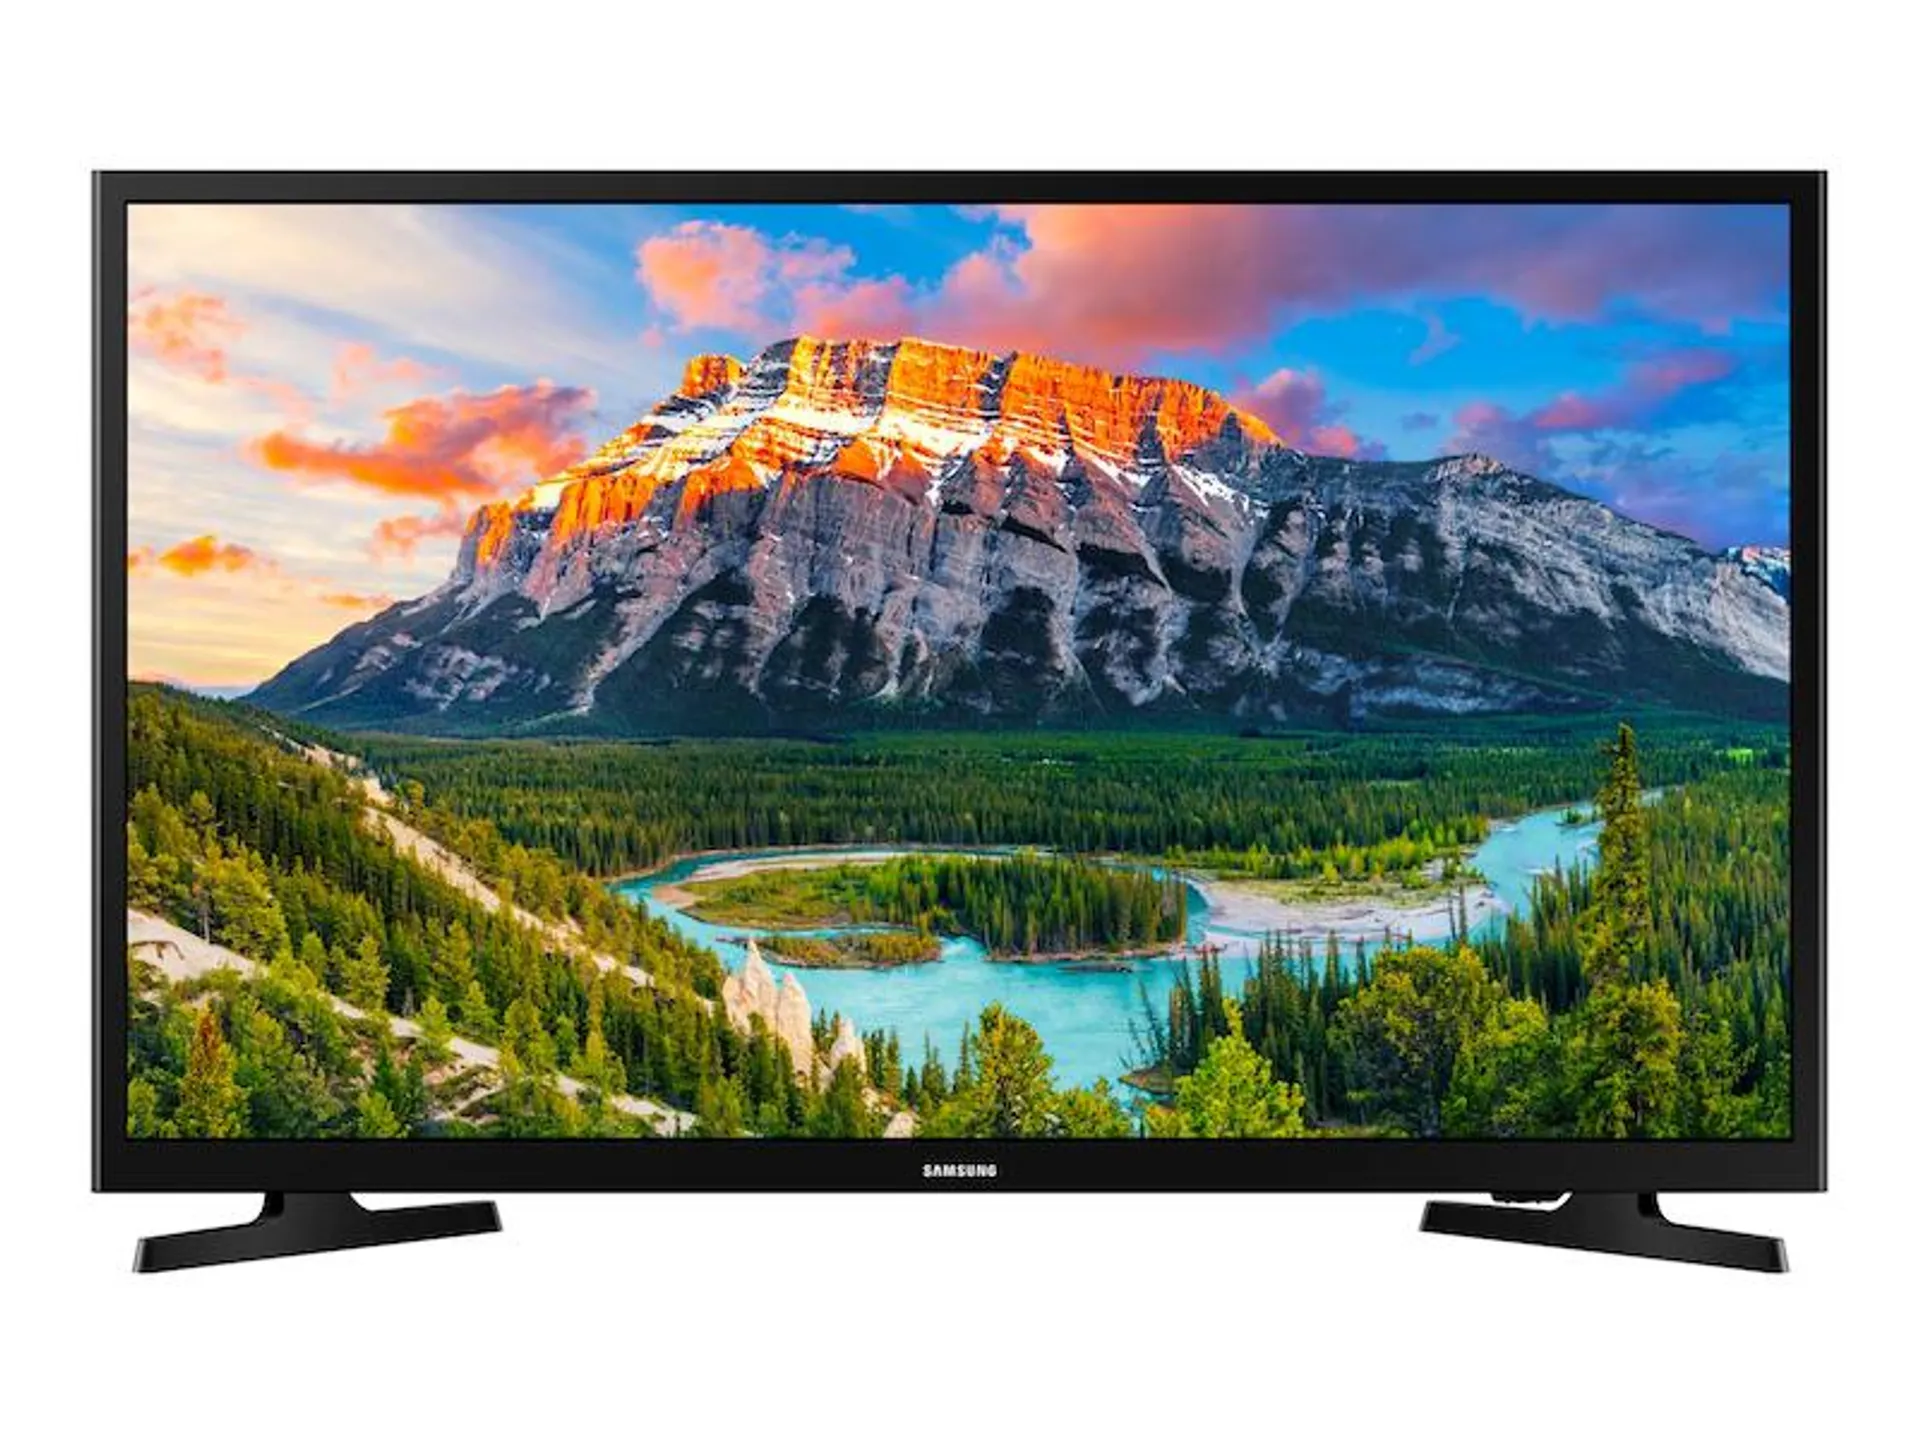 N5300 Smart Full HD TV (2018)